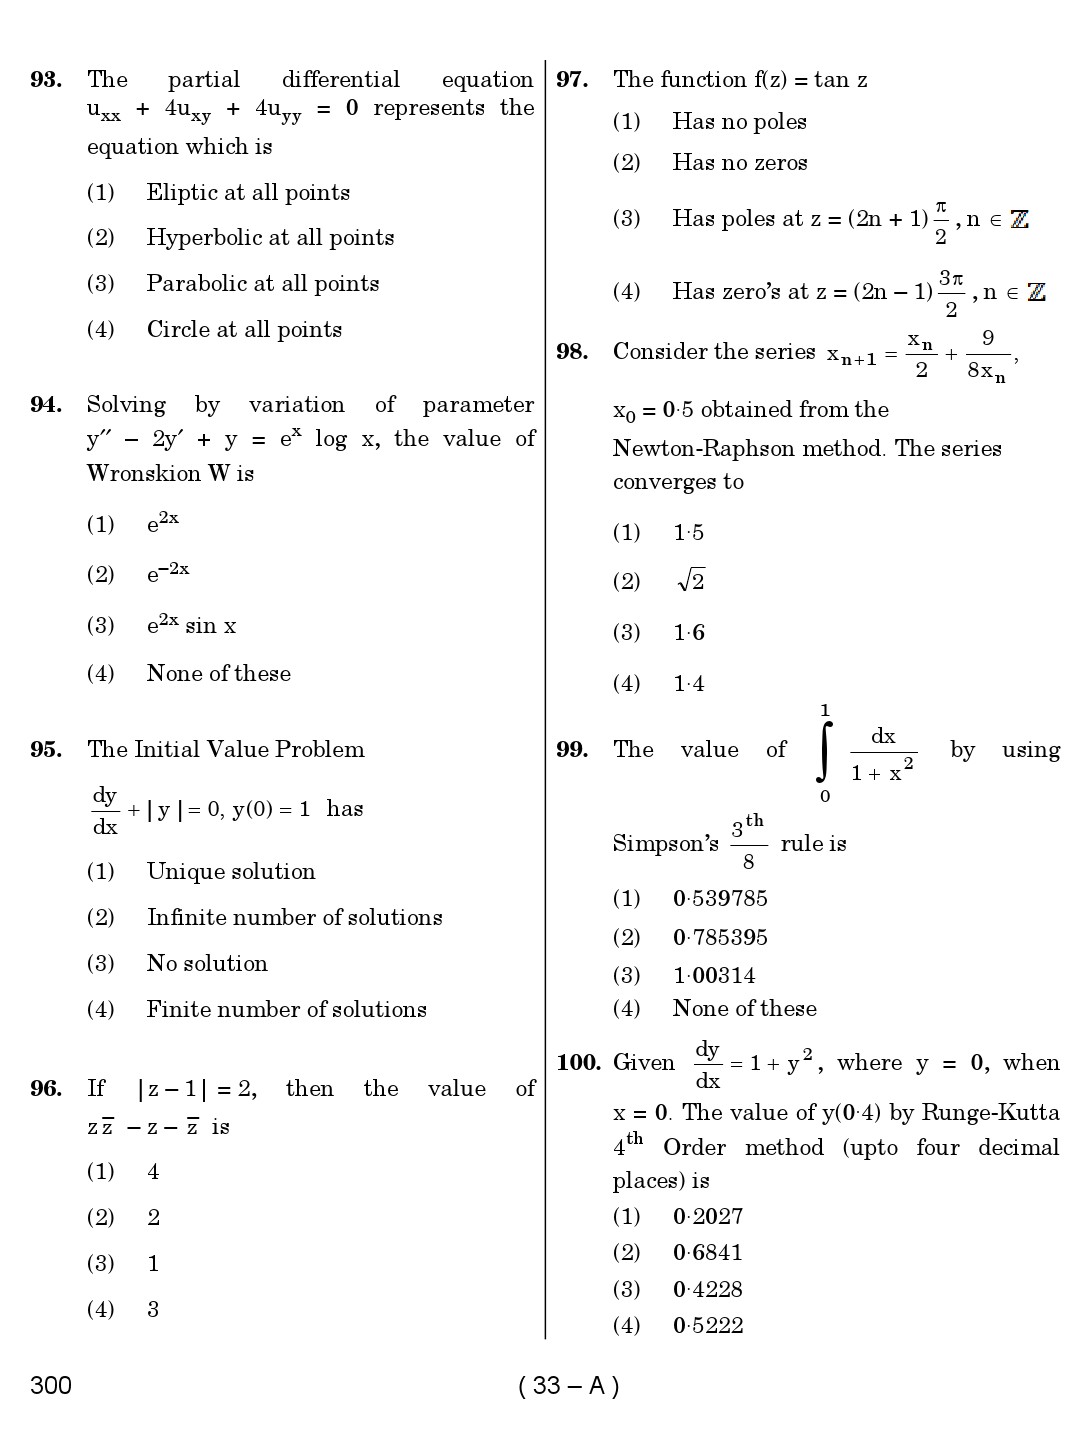 Karnataka PSC Mathematics Teacher Exam Sample Question Paper 2018 33